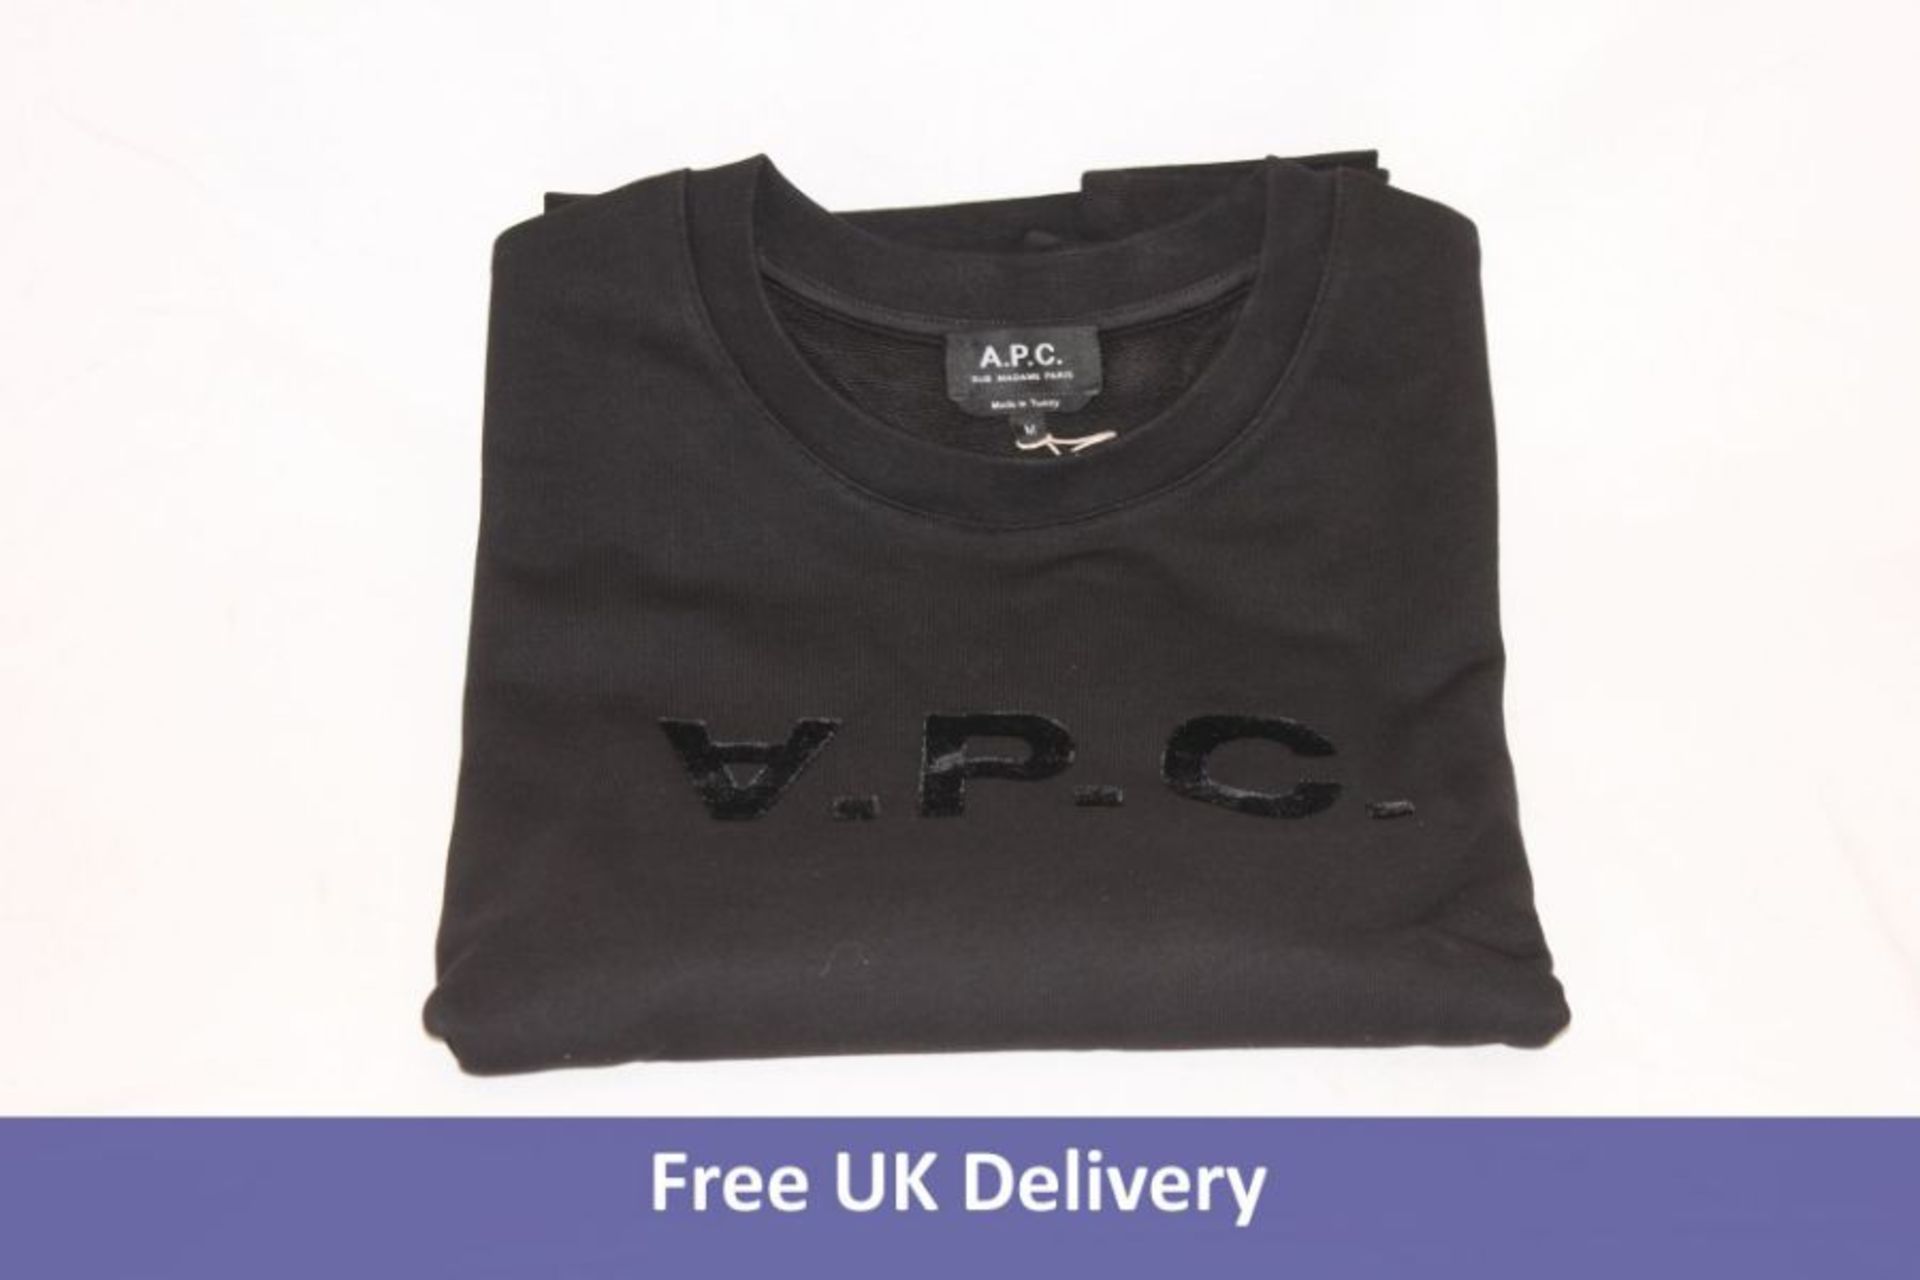 Three A.P.C. VPC Crew Neck Sweatshirt, Black, Size M